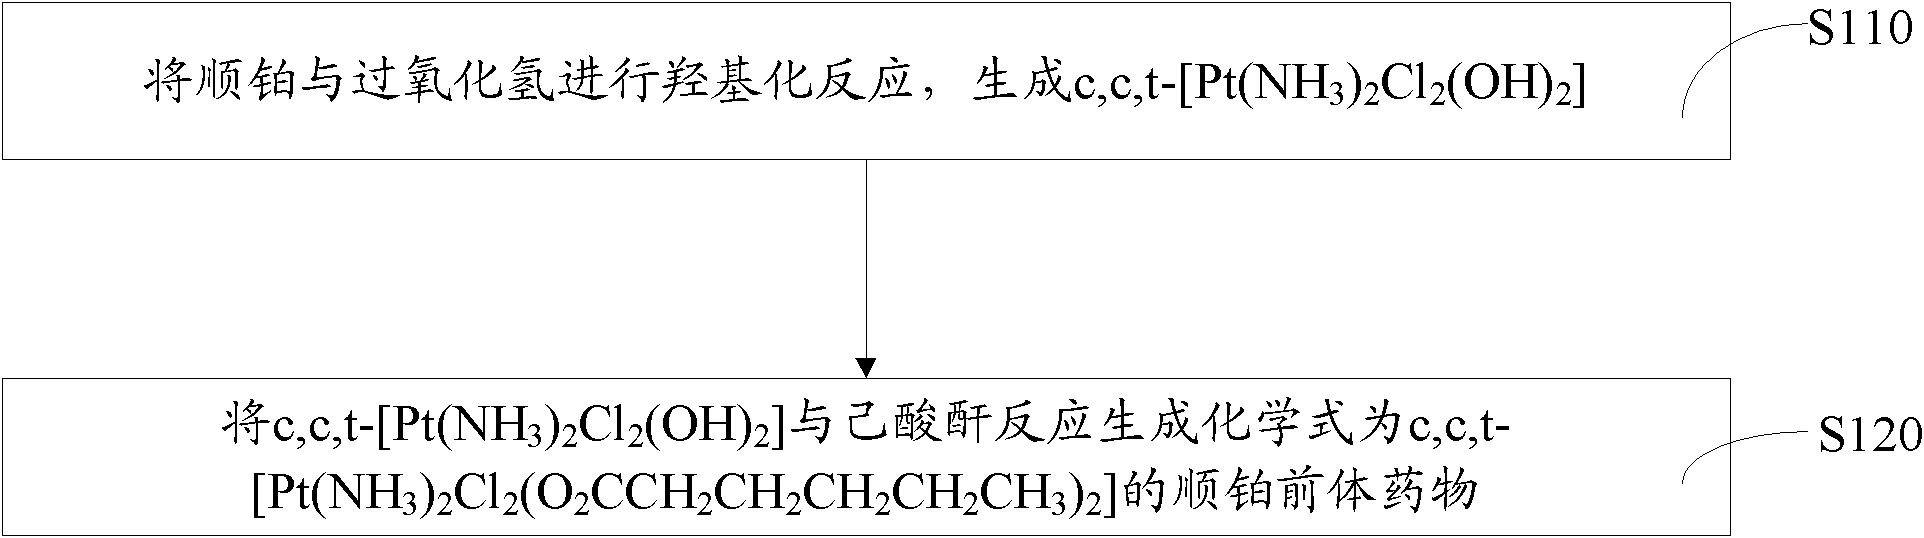 Cisplatin precursor medicine as well as preparation method thereof, and core-shell nano-particle as well as preparation method thereof